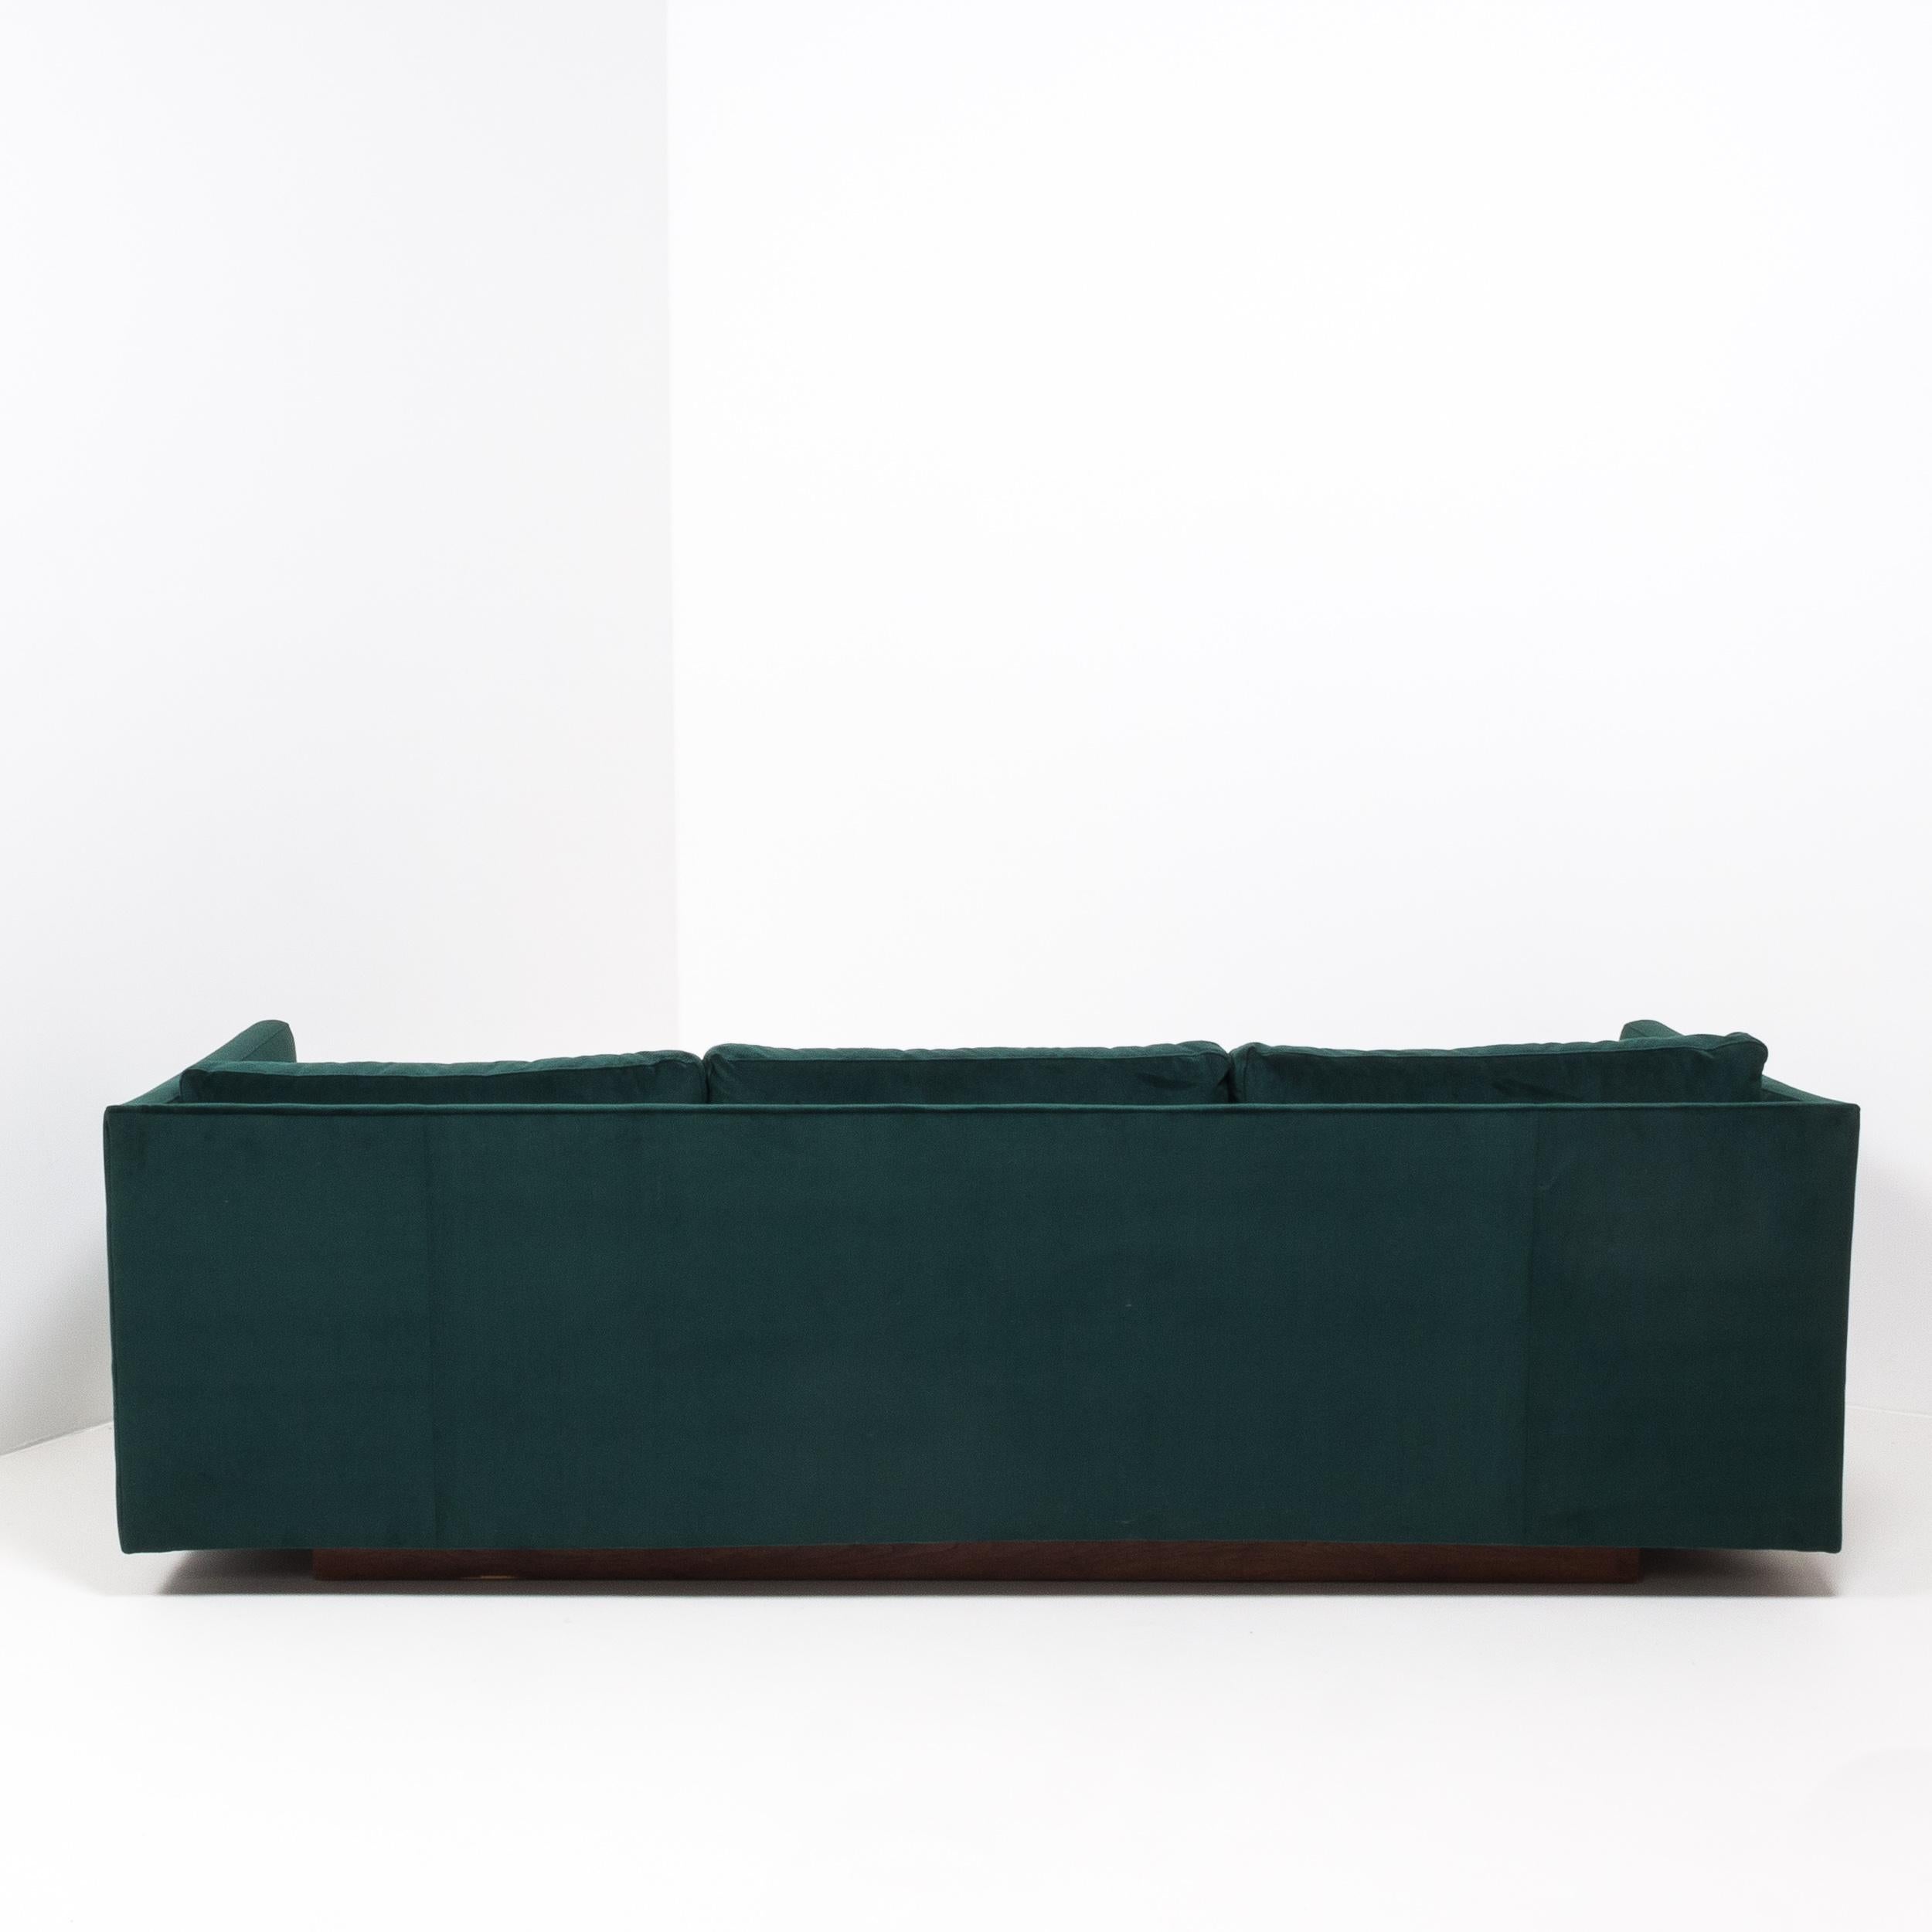 American Three-Seat Green Velvet Tuxedo Sofa by Milo Baughman for Thayer Coggin, 1967